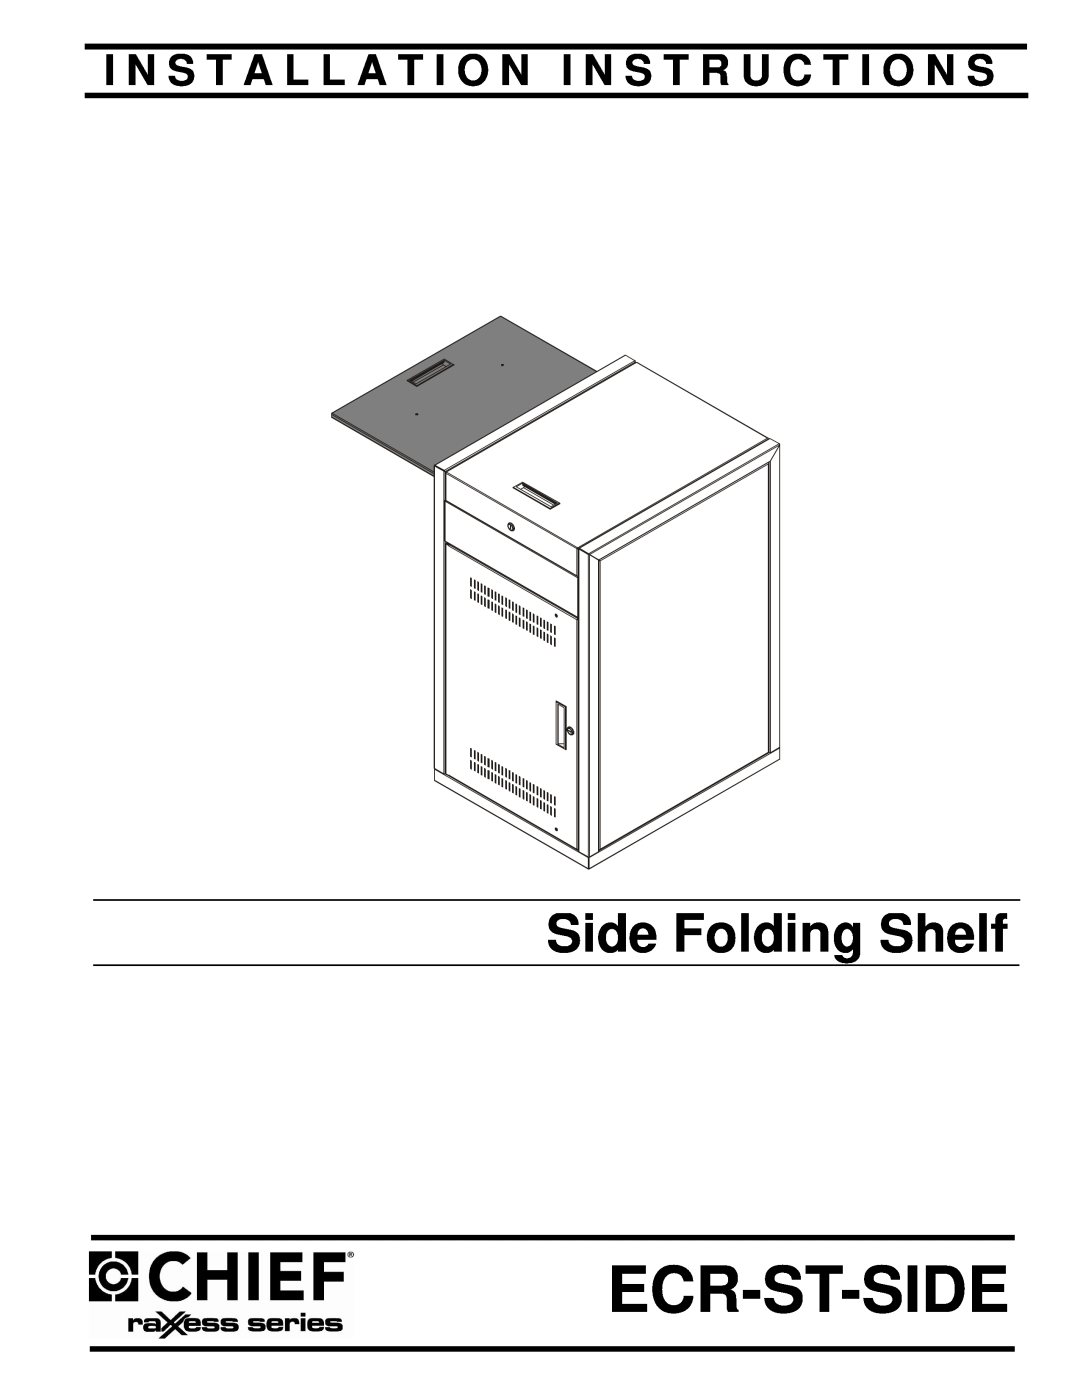 Chief Manufacturing side shelf for the steel elite converta rack installation instructions Ecr-St-Side, Side Folding Shelf 